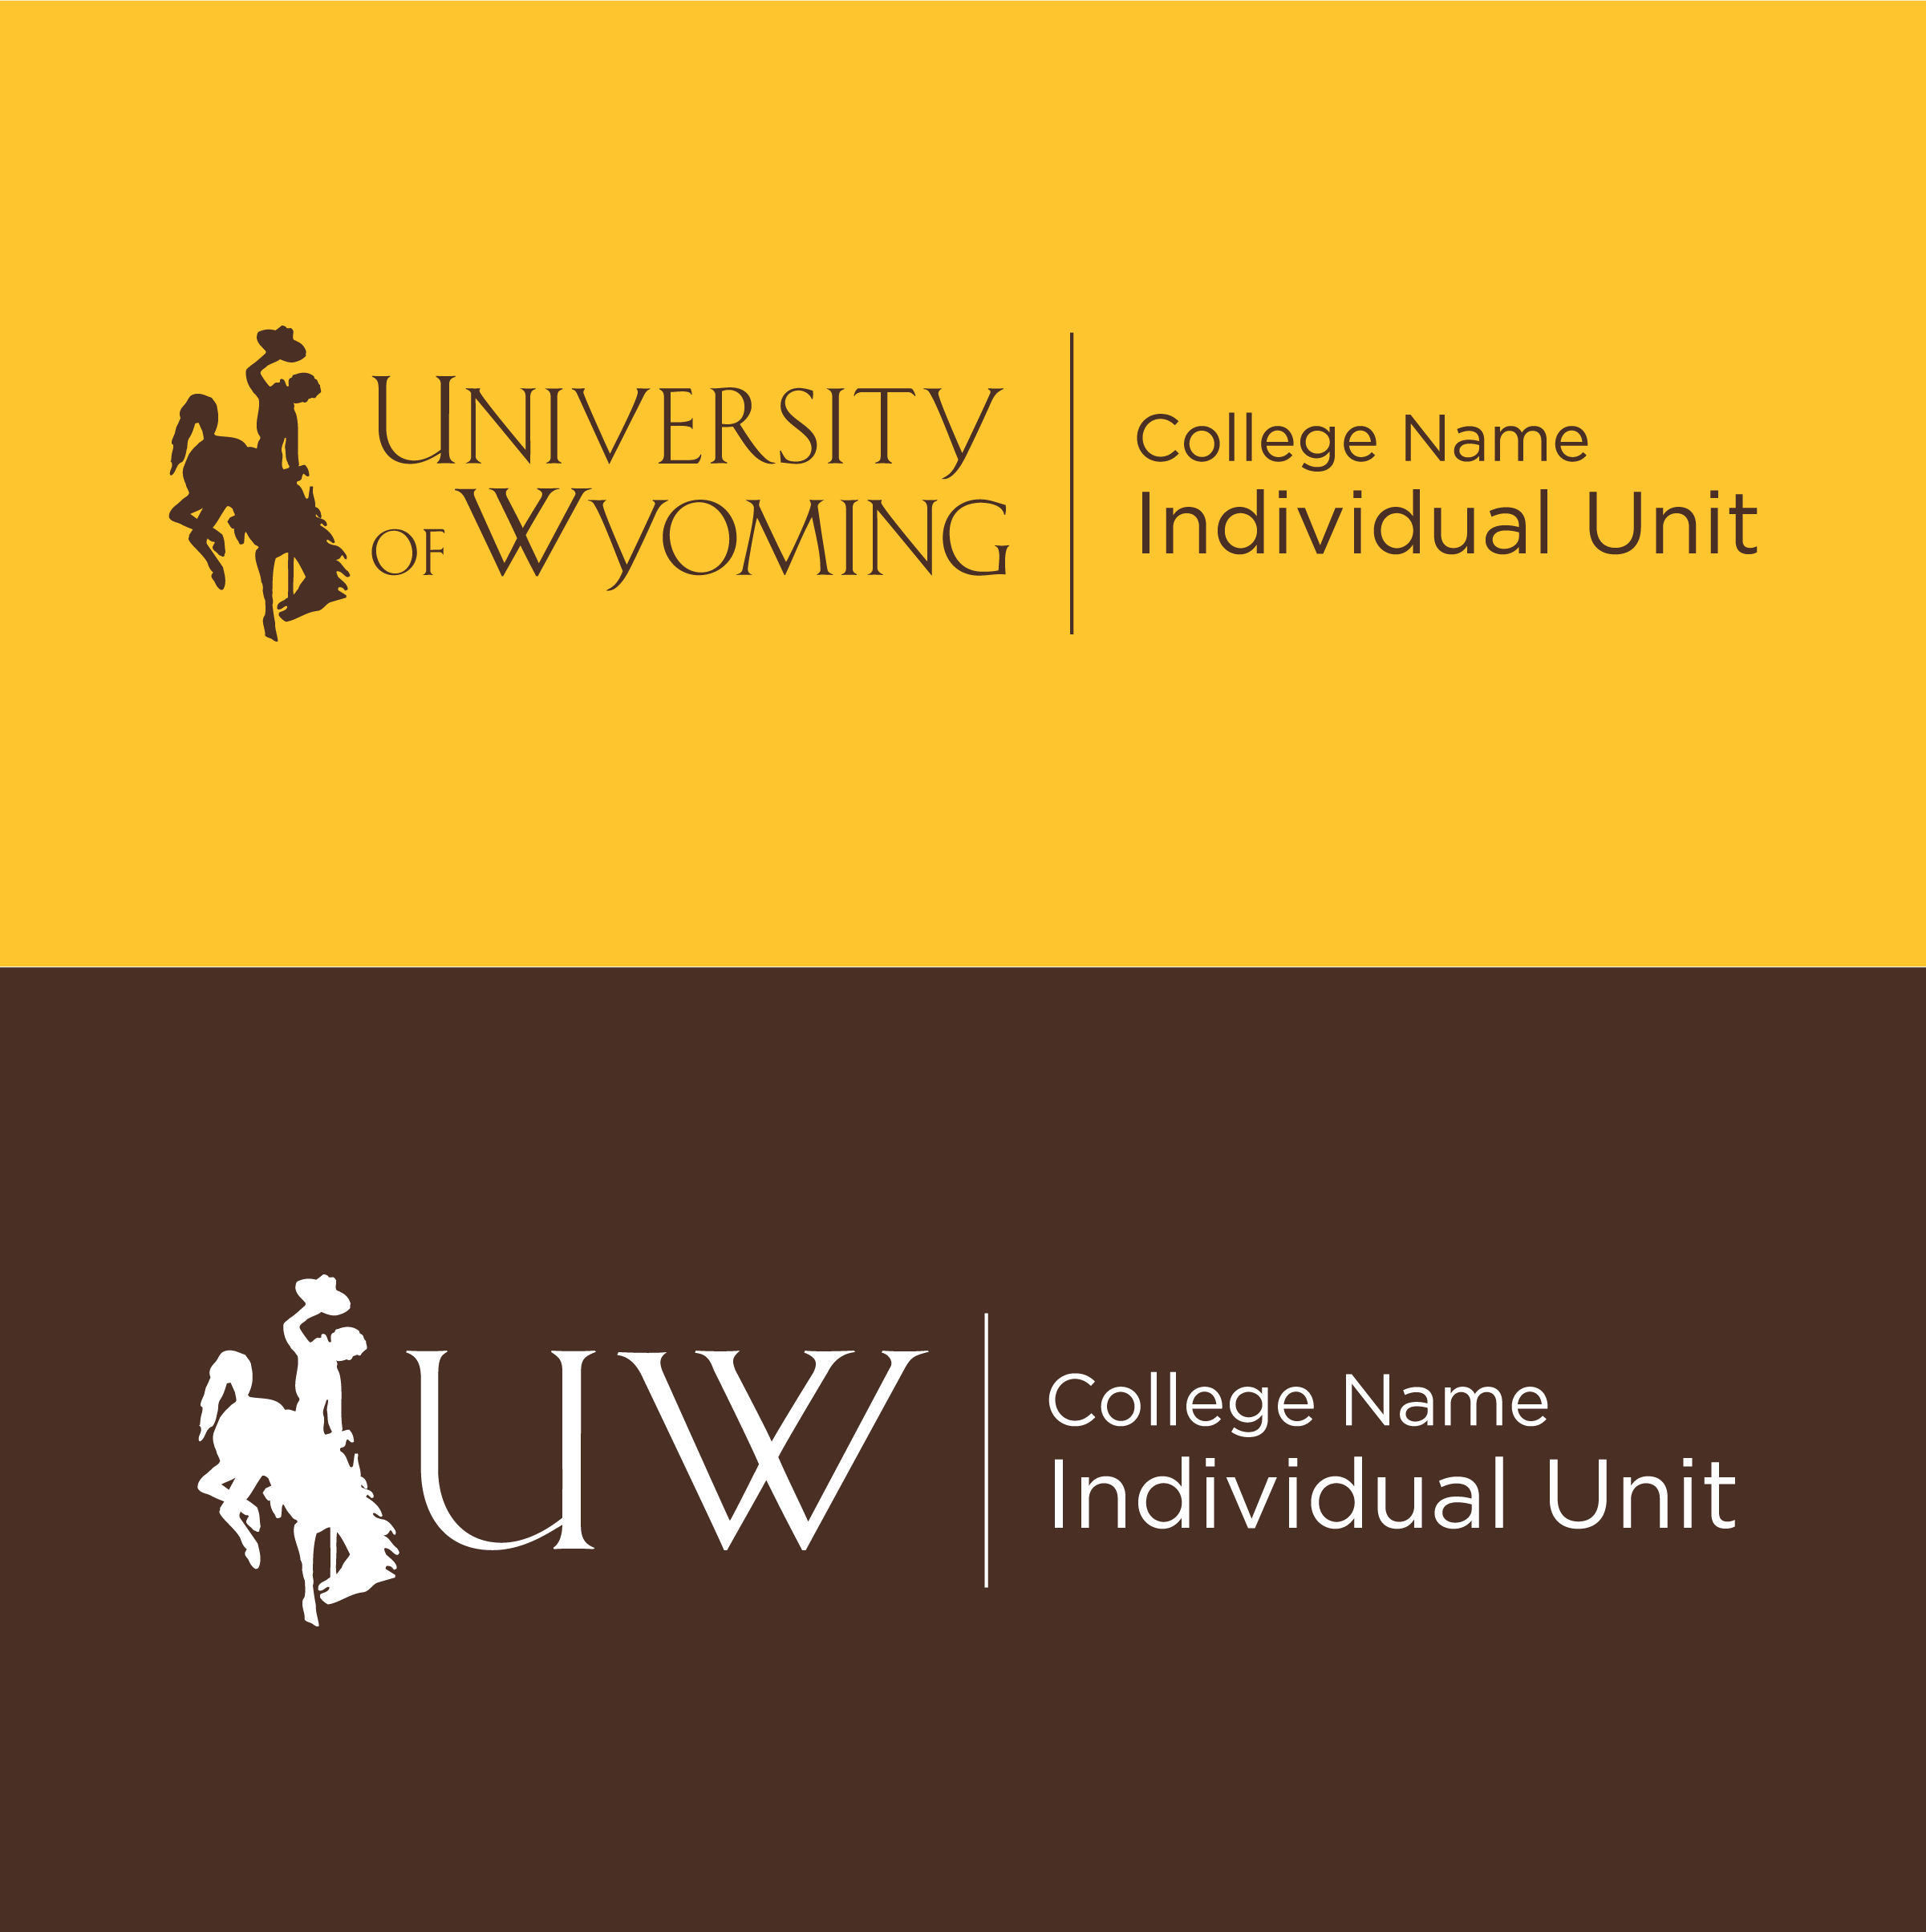 UW Logo - UW Logos and Signatures | Institutional Marketing | University of ...